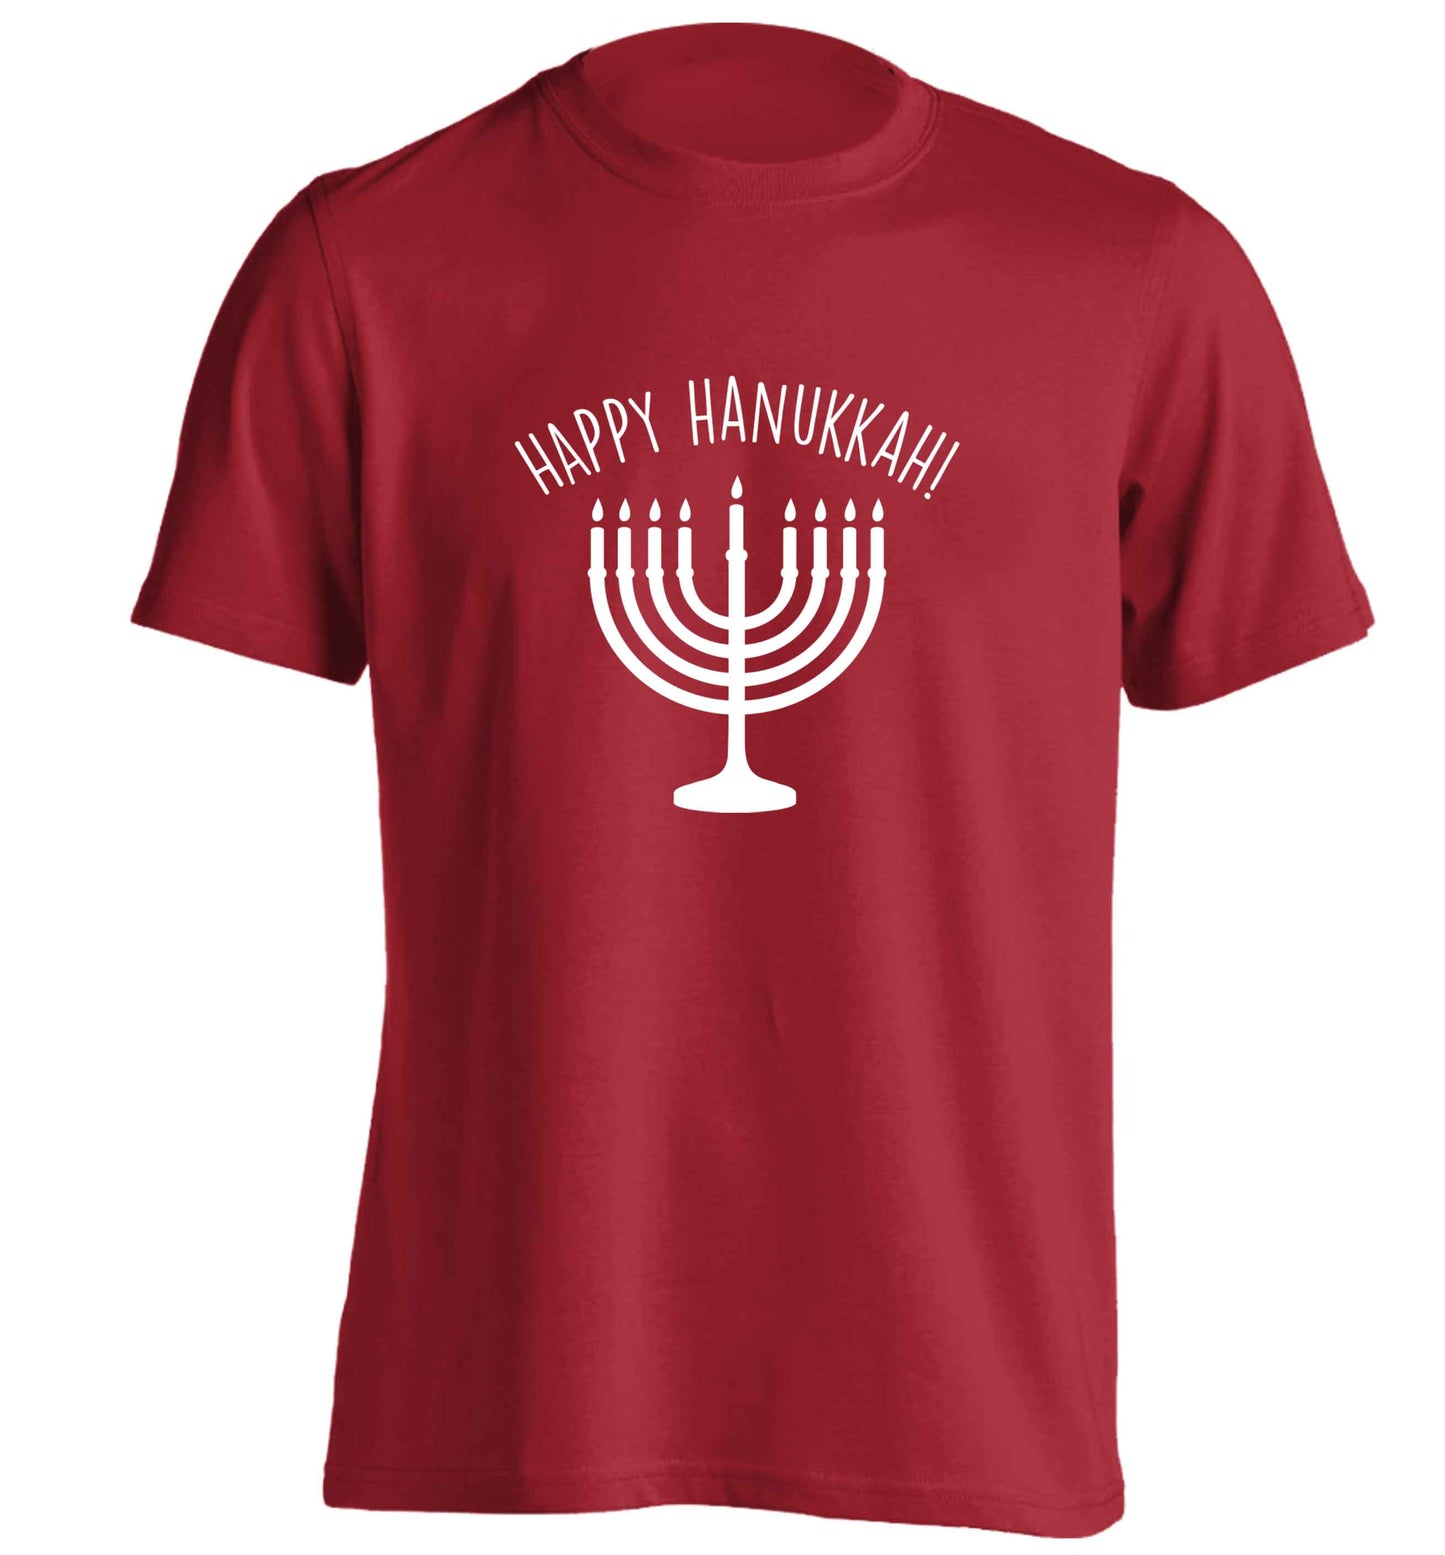 Happy hanukkah adults unisex red Tshirt 2XL